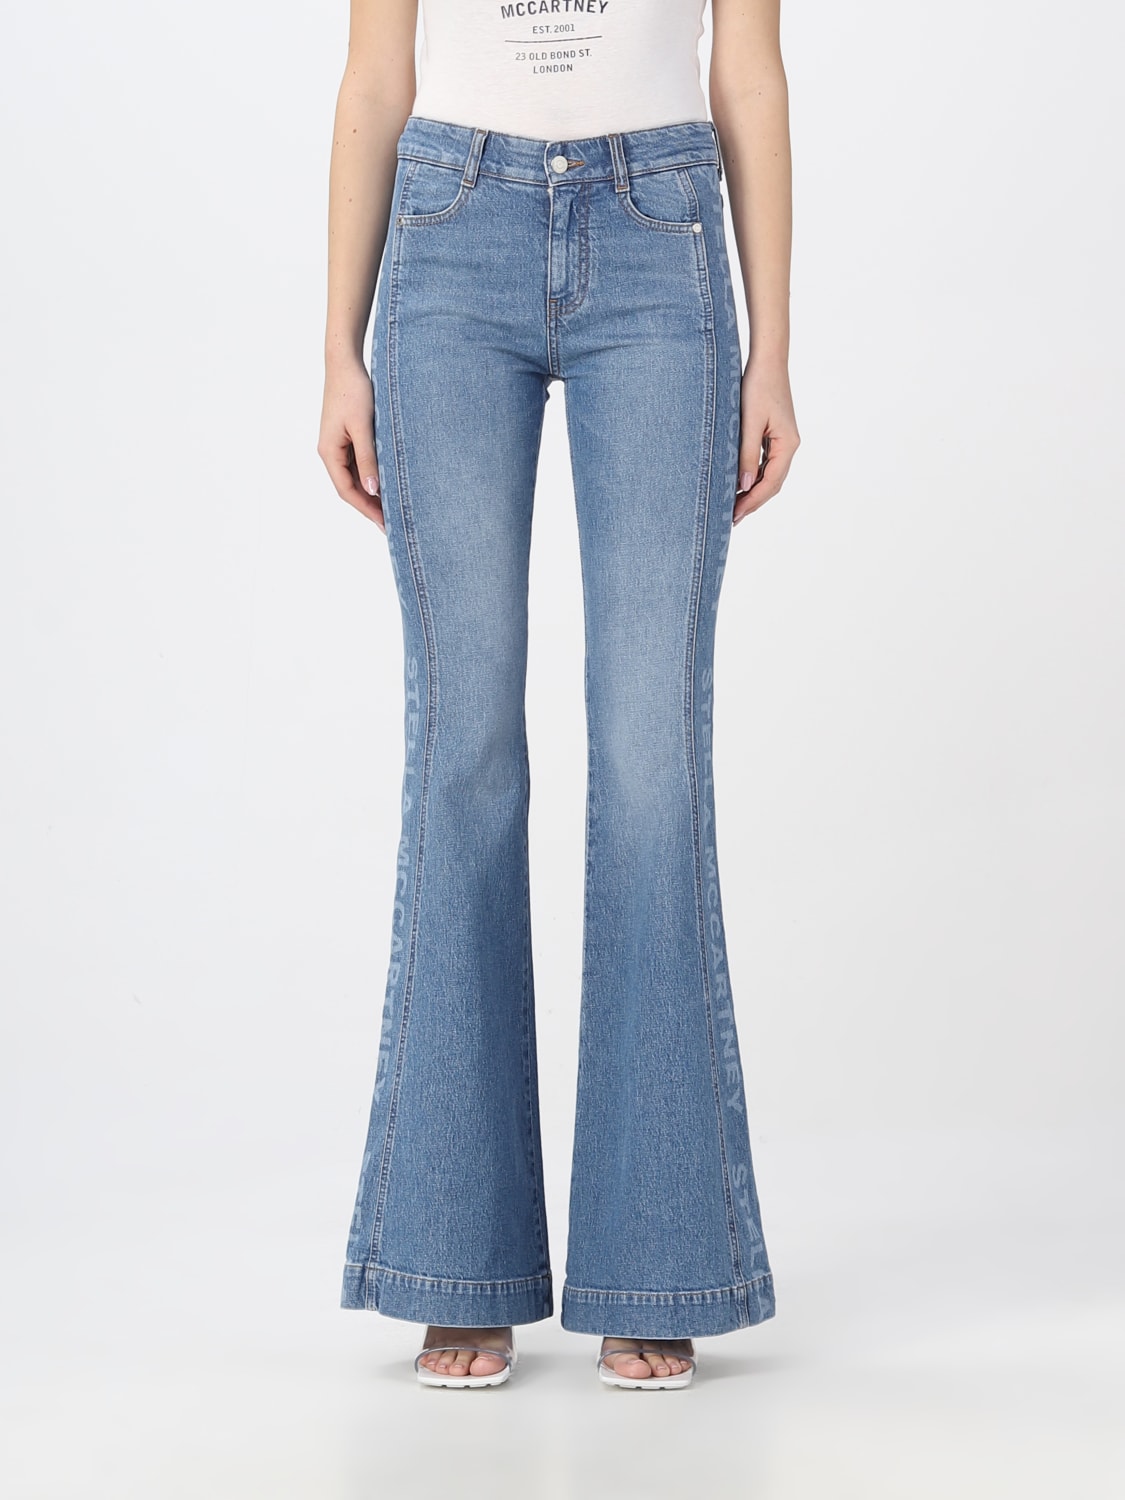 STELLA MCCARTNEY: Blue | Stella Mccartney jeans 6D00553SOH86 online on GIGLIO.COM